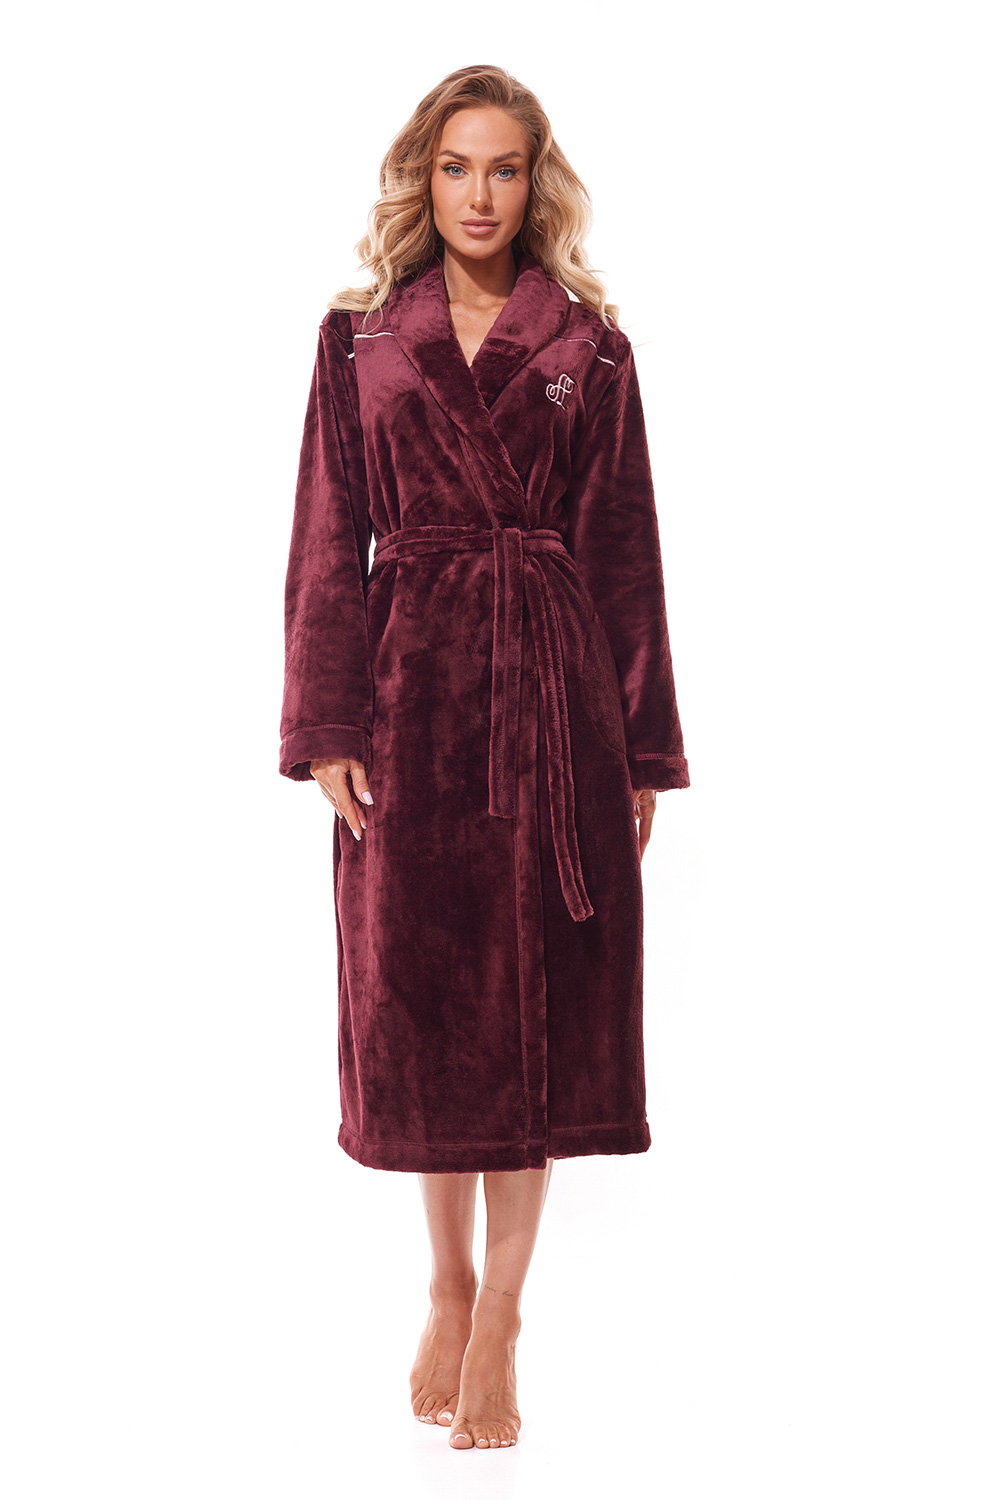 Long bathrobe model 188082 L&L..